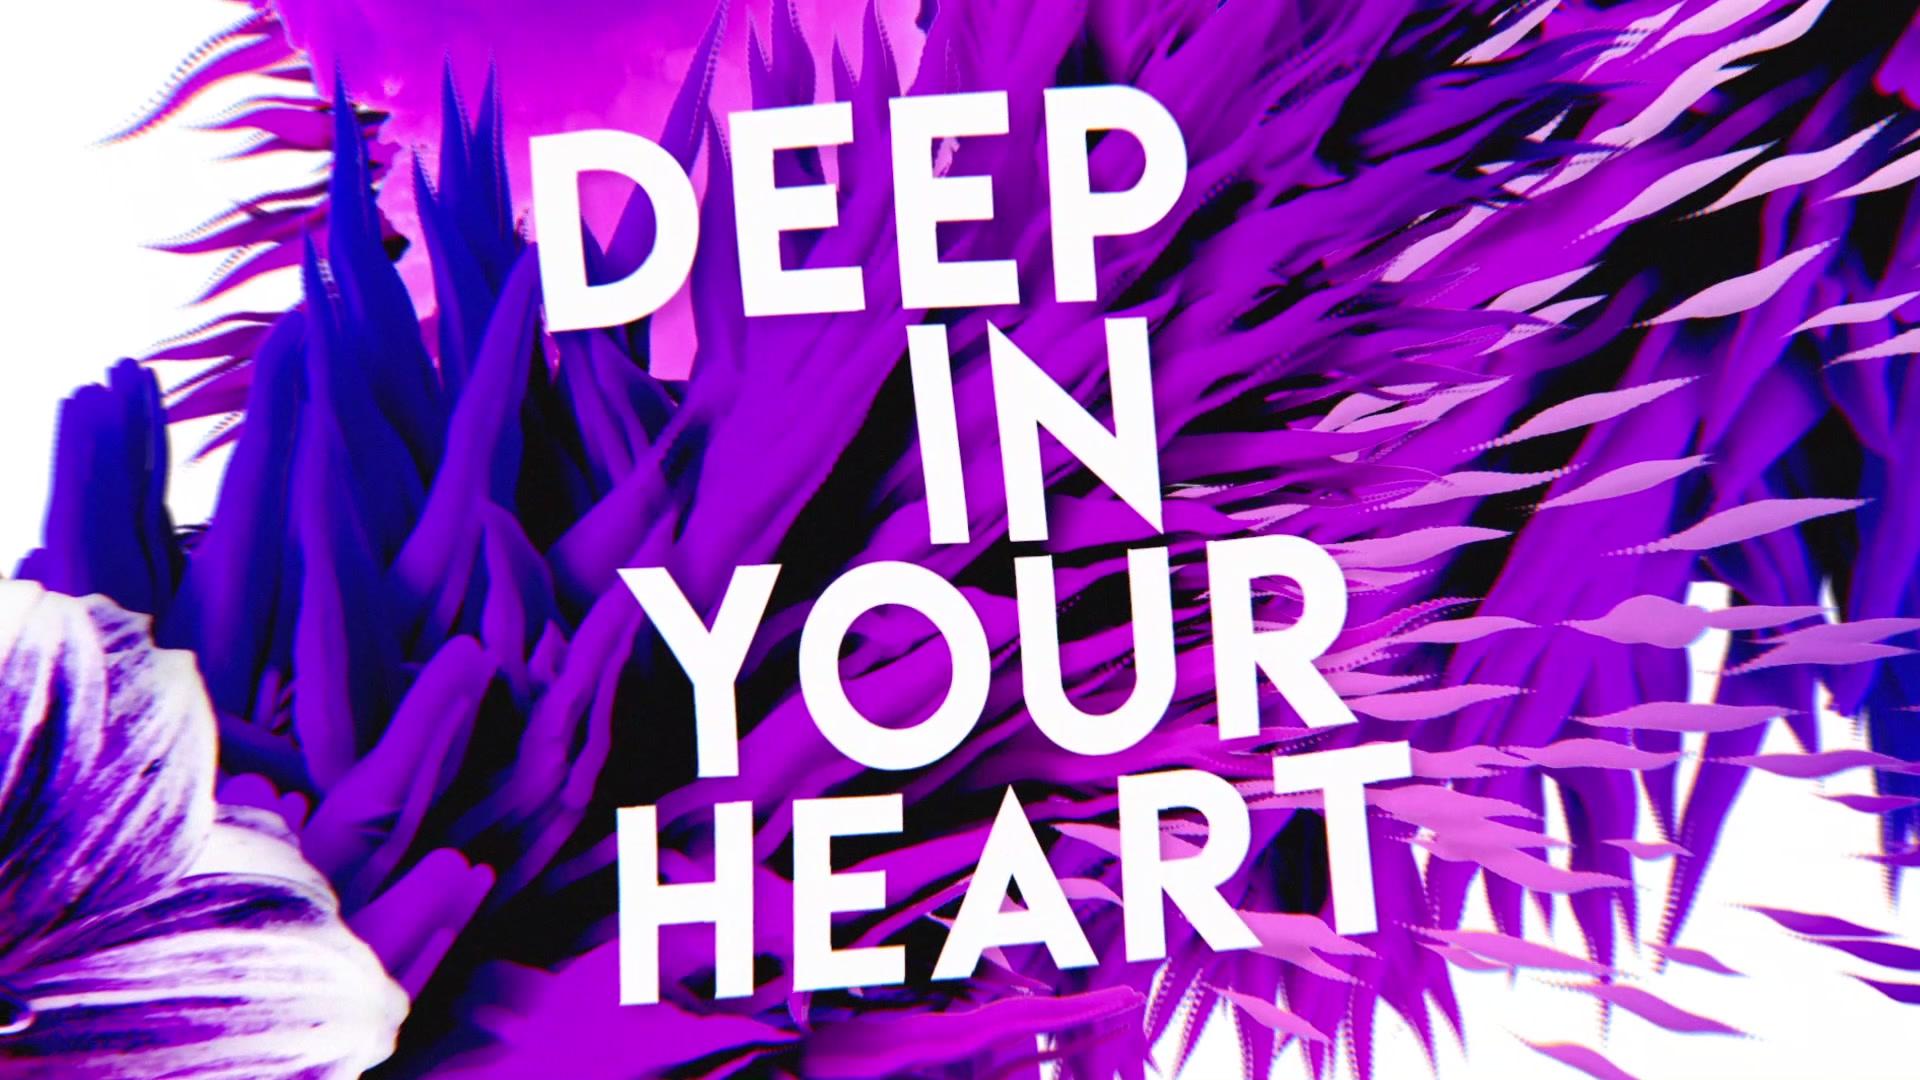 Alex Ross - Deep In Your Heart (Lyric Video)